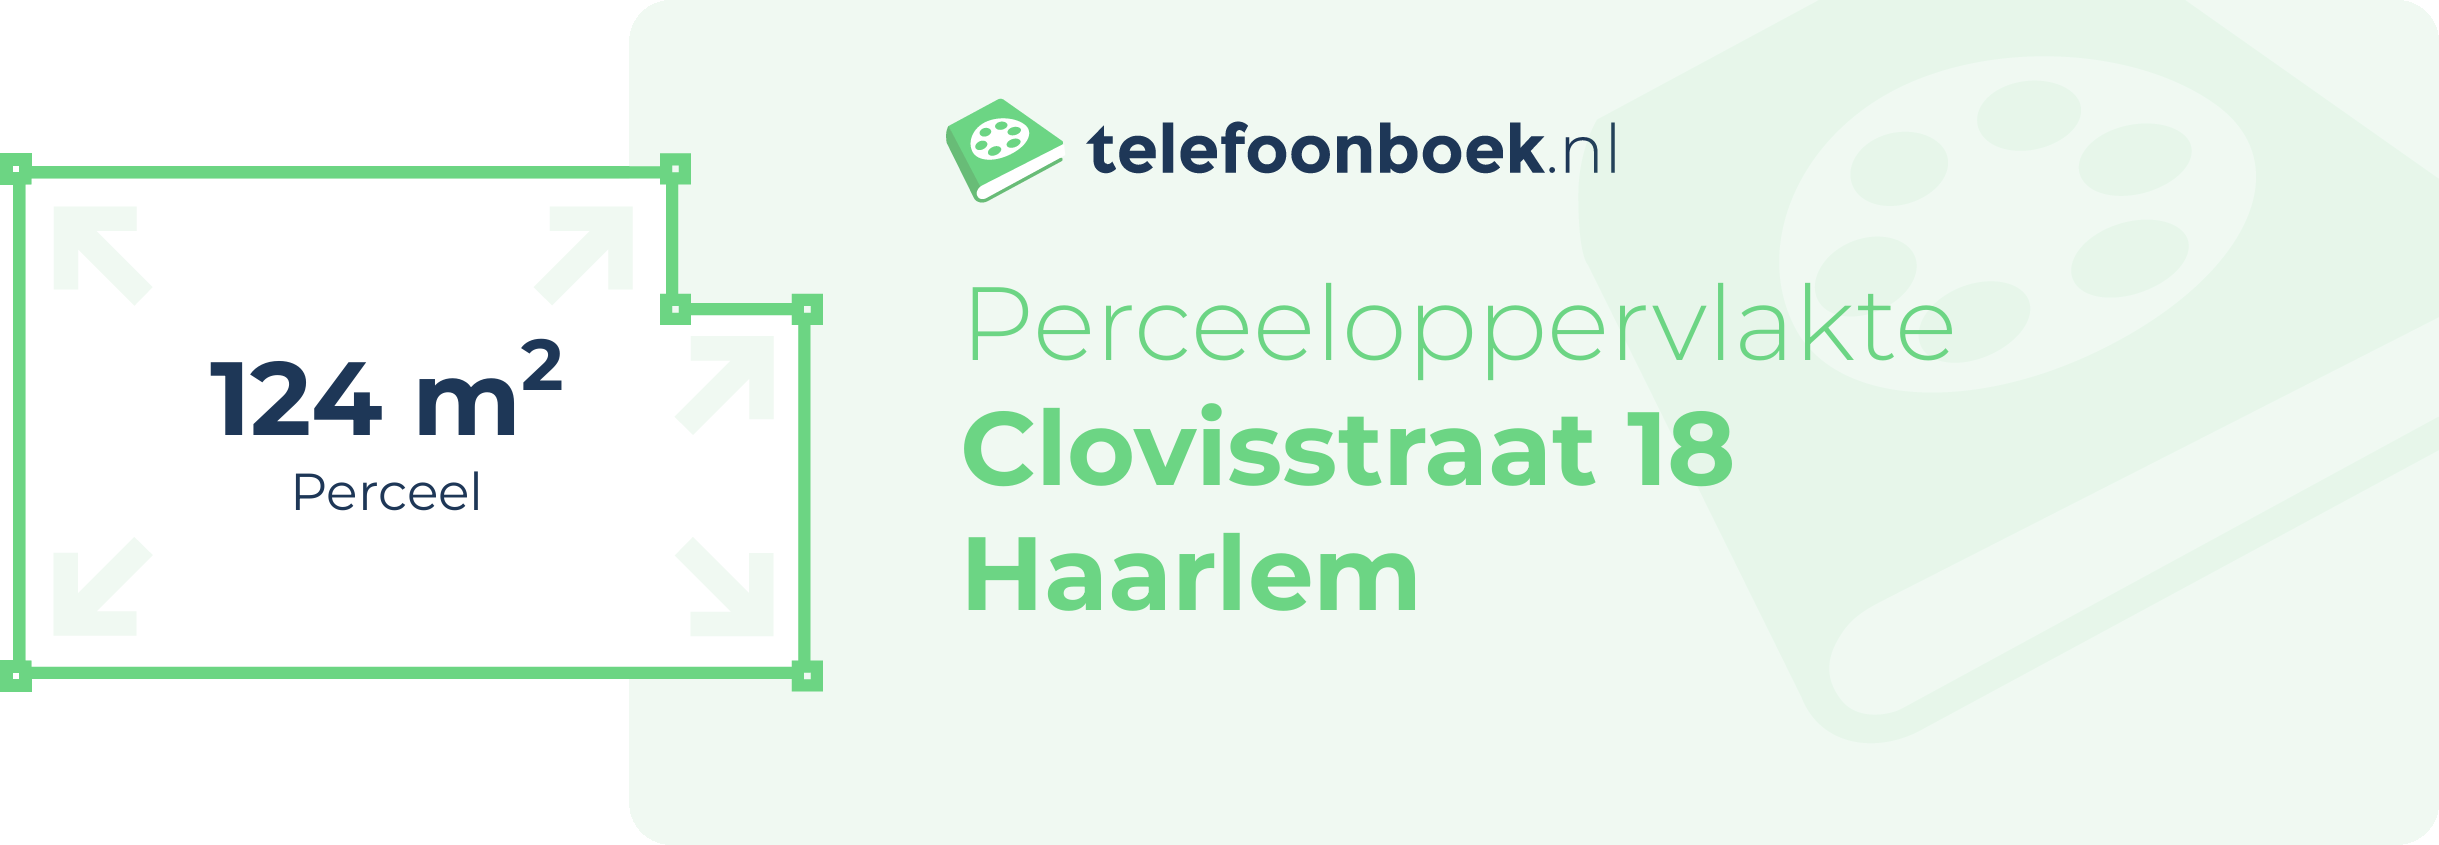 Perceeloppervlakte Clovisstraat 18 Haarlem